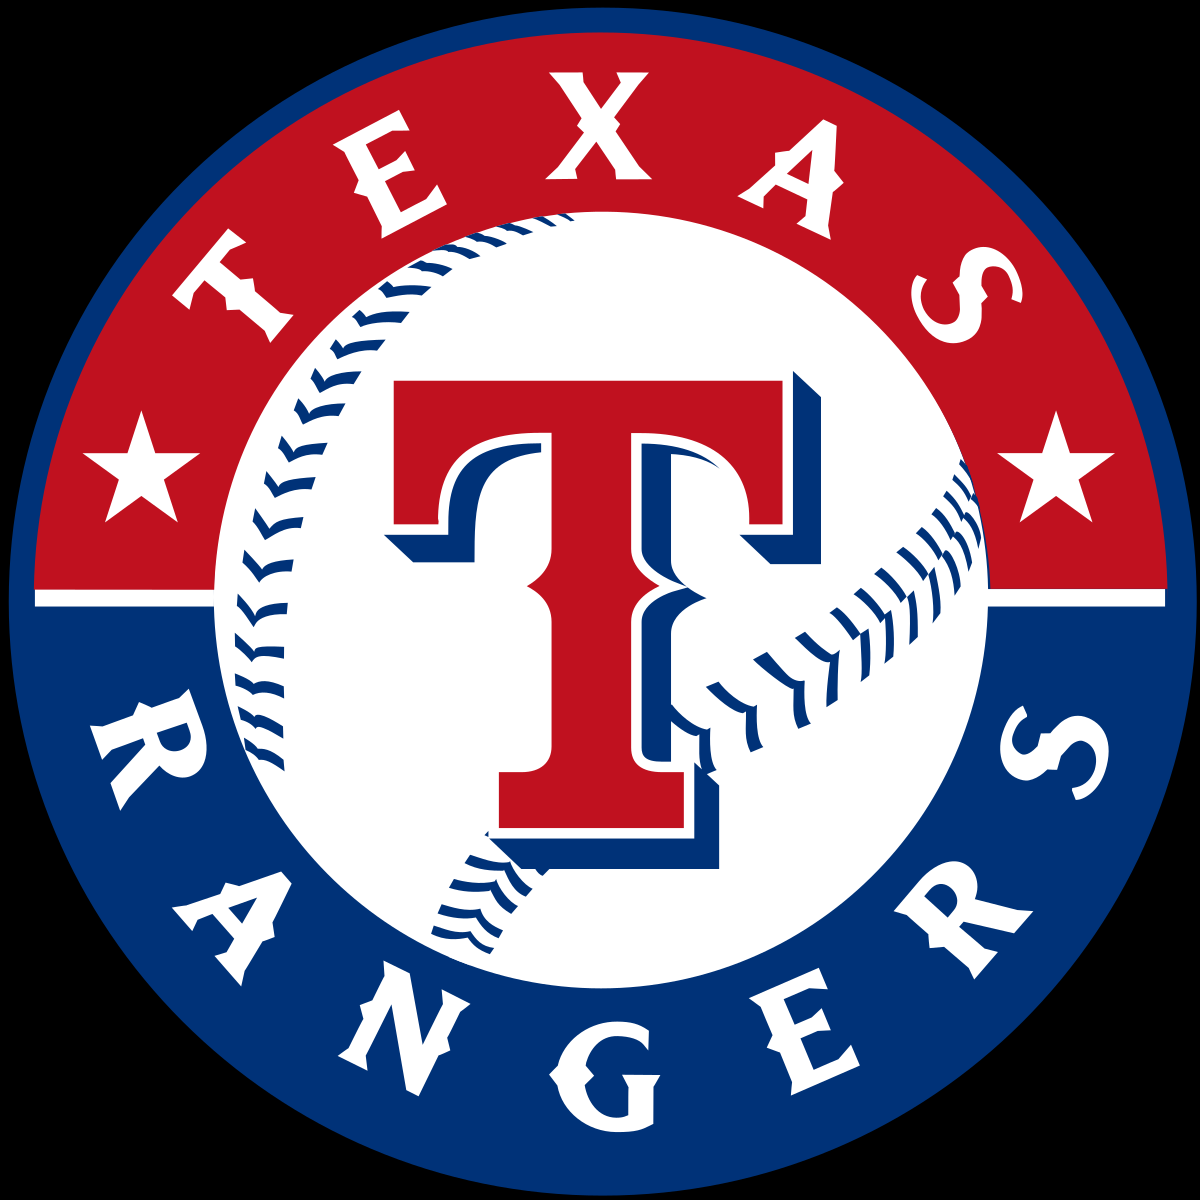 Texas Rangers vs Los Angeles Angels